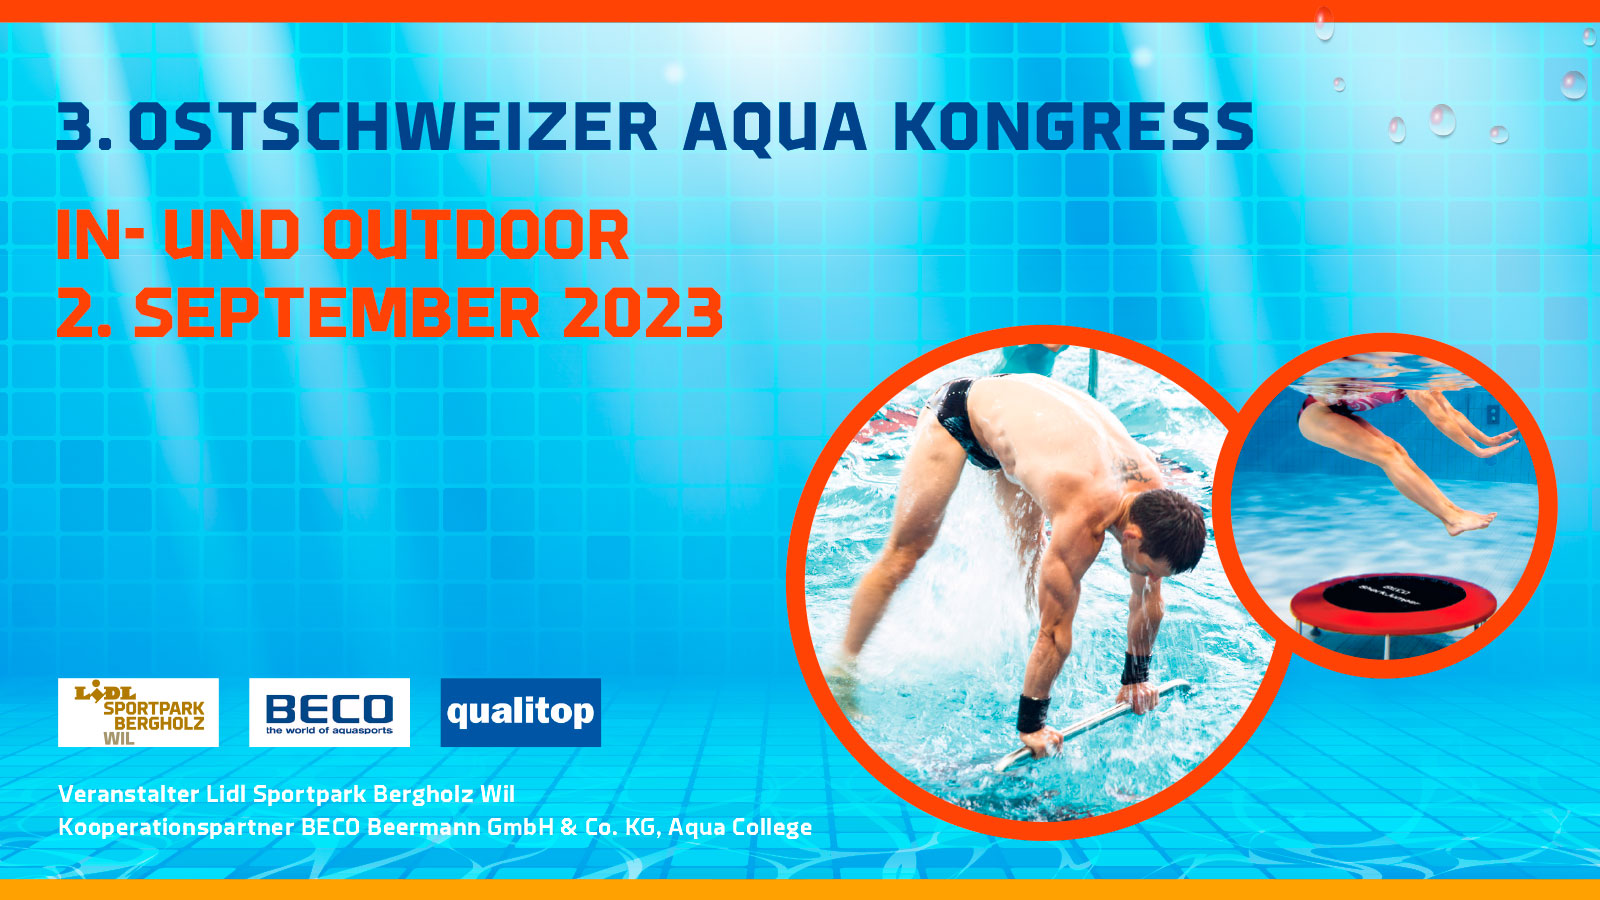 #WELOVEAQUASPORTS Ostschweizer Aquakongress 2023